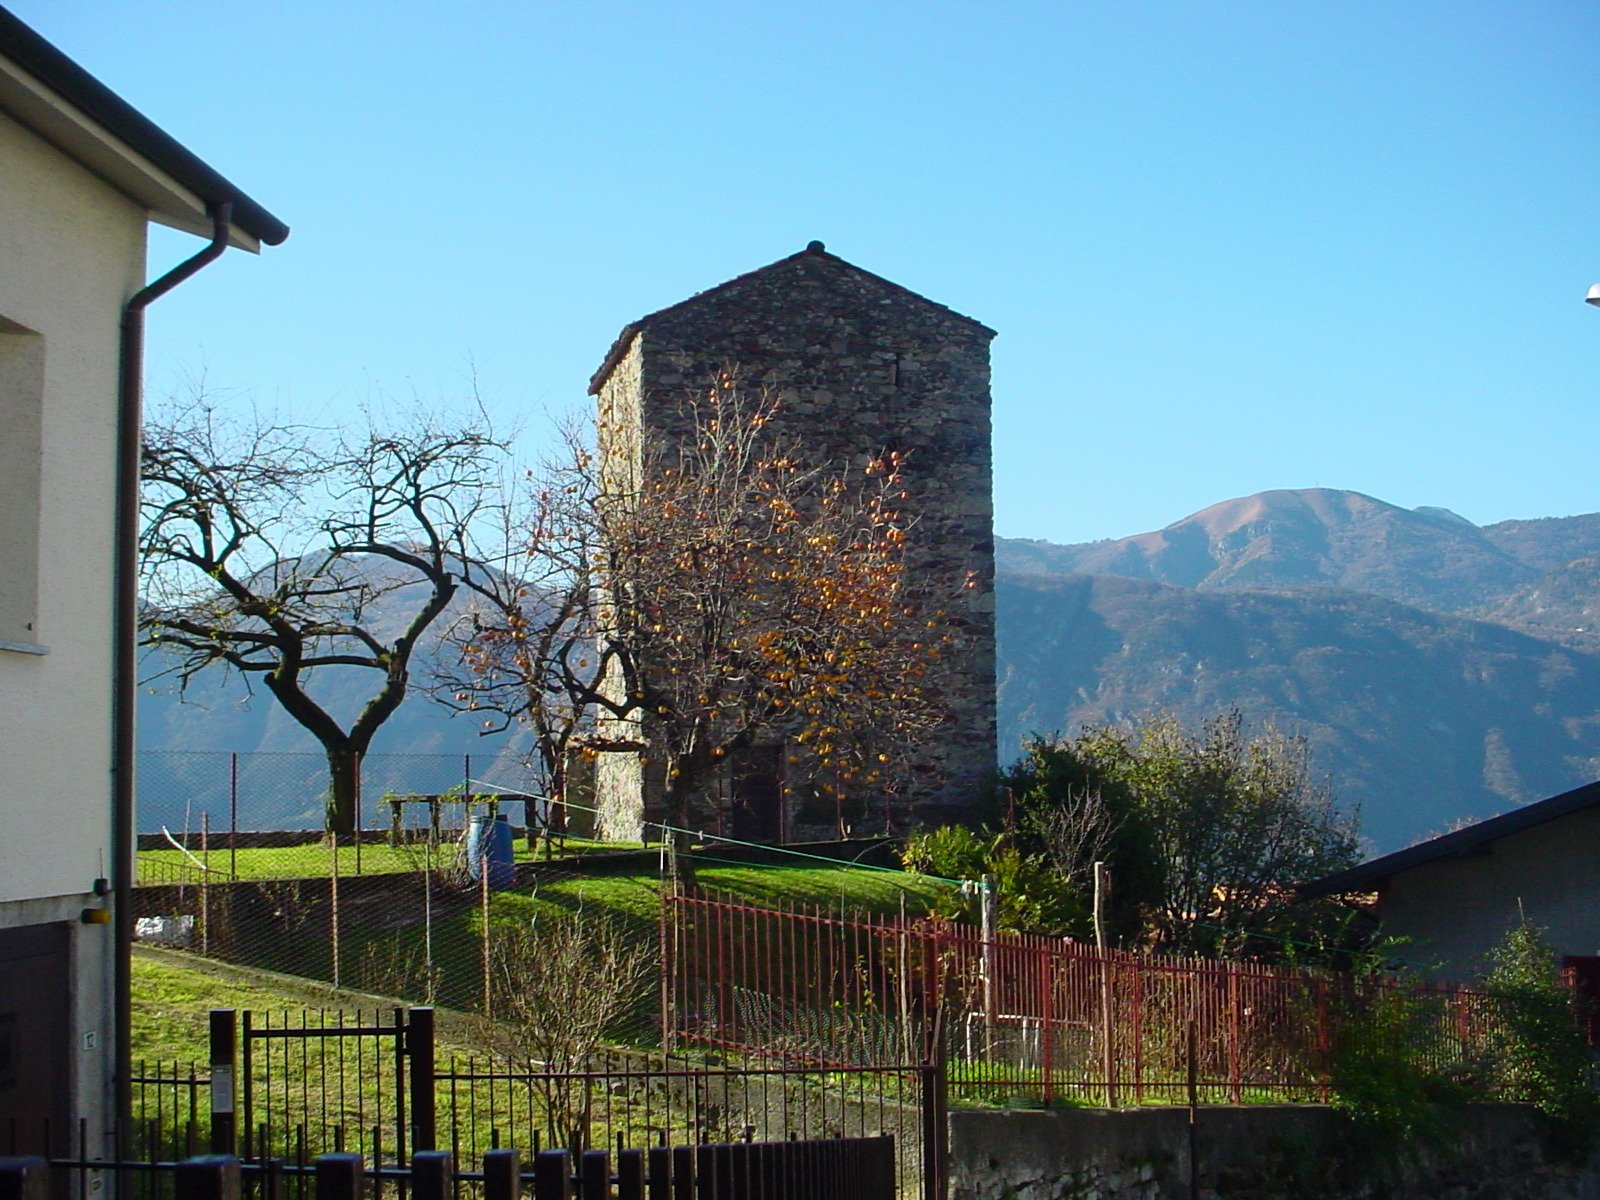 Torre dei Lanfranconi